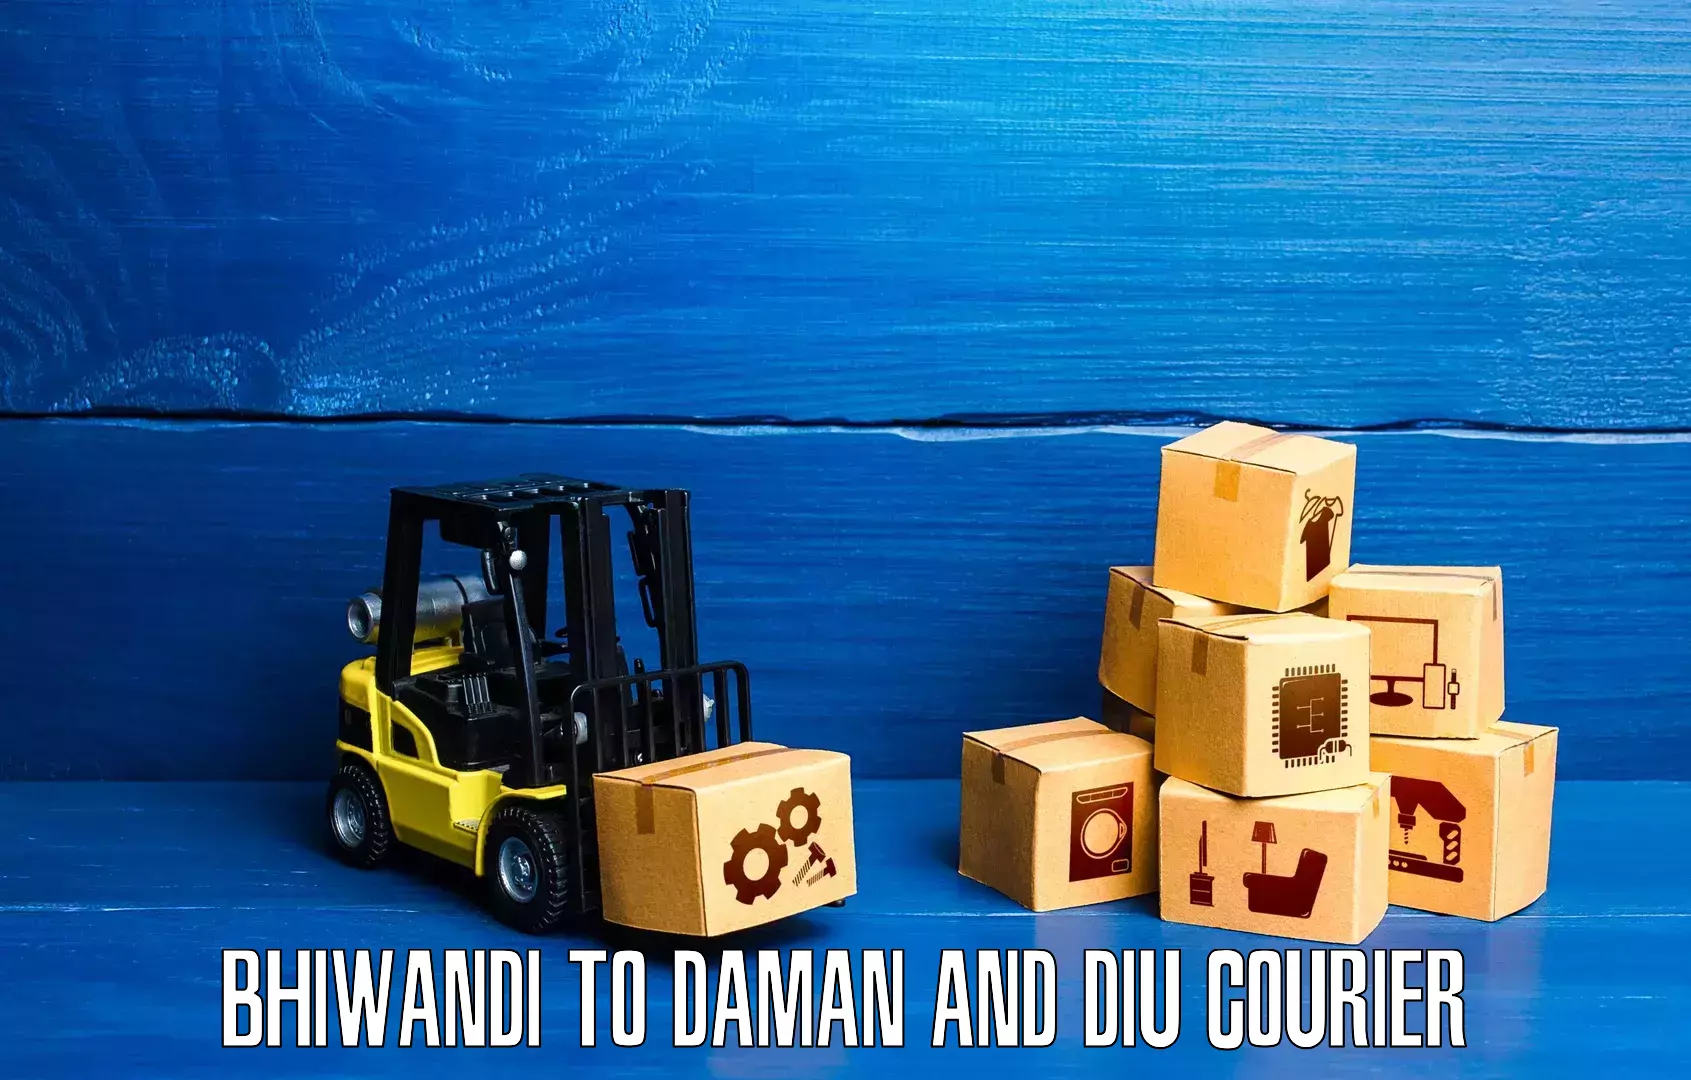 24/7 courier service Bhiwandi to Daman and Diu